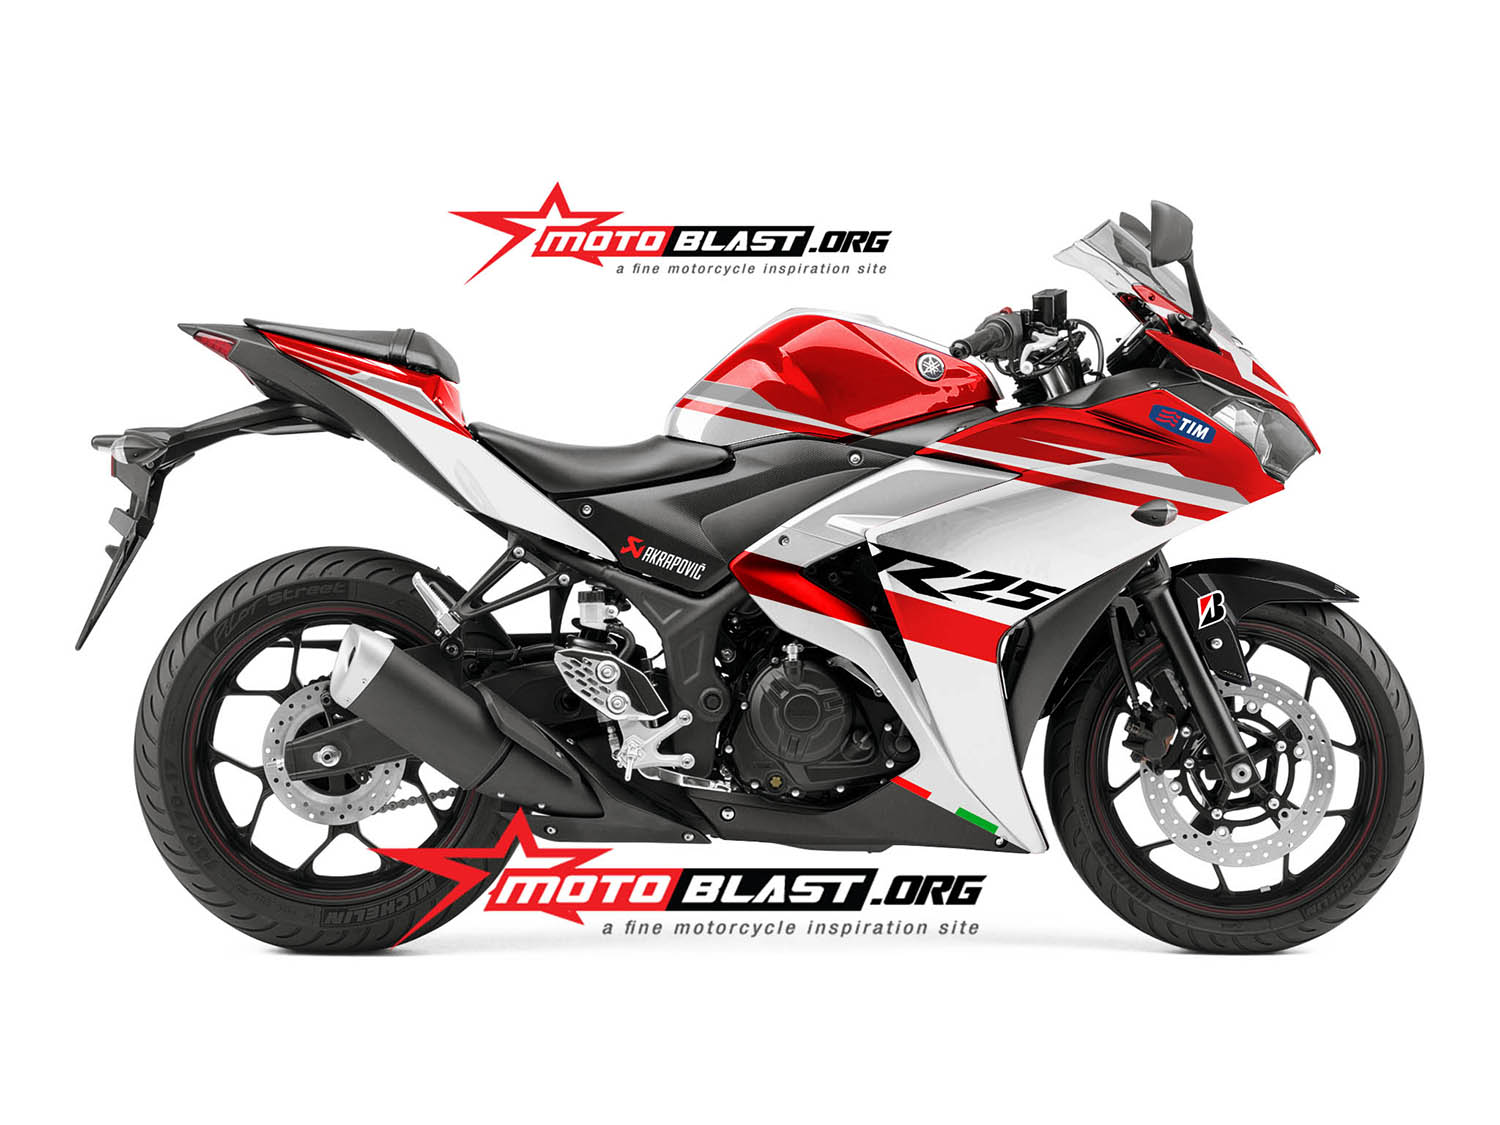 Modif Striping Yamaha R25 R3 Merah Ducati Motogp Cal